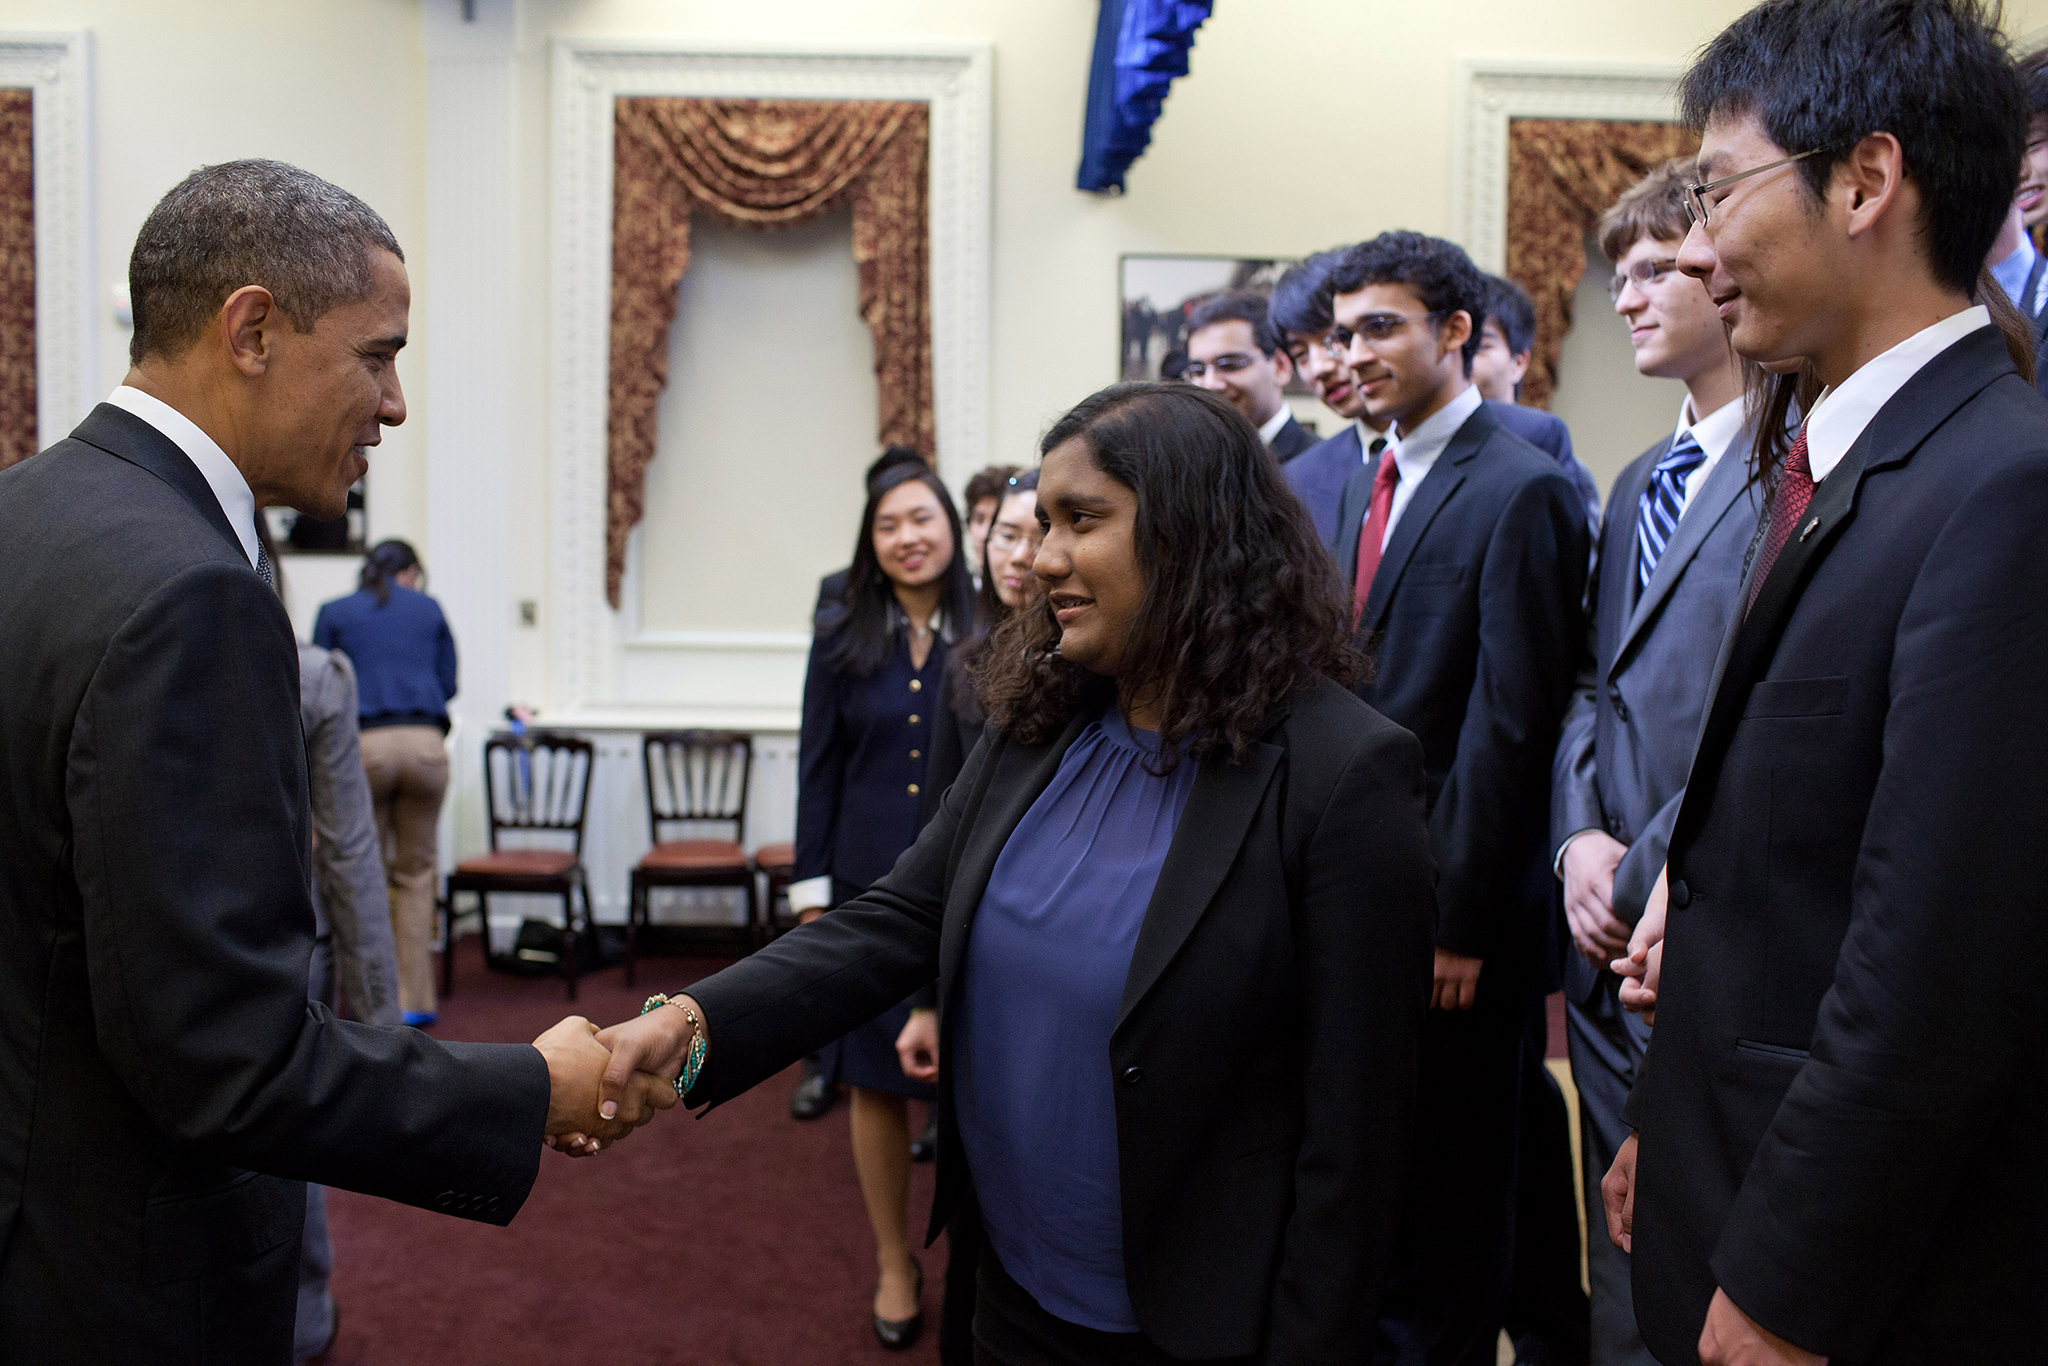 STS finalist Sayoni Saha meets President Obama